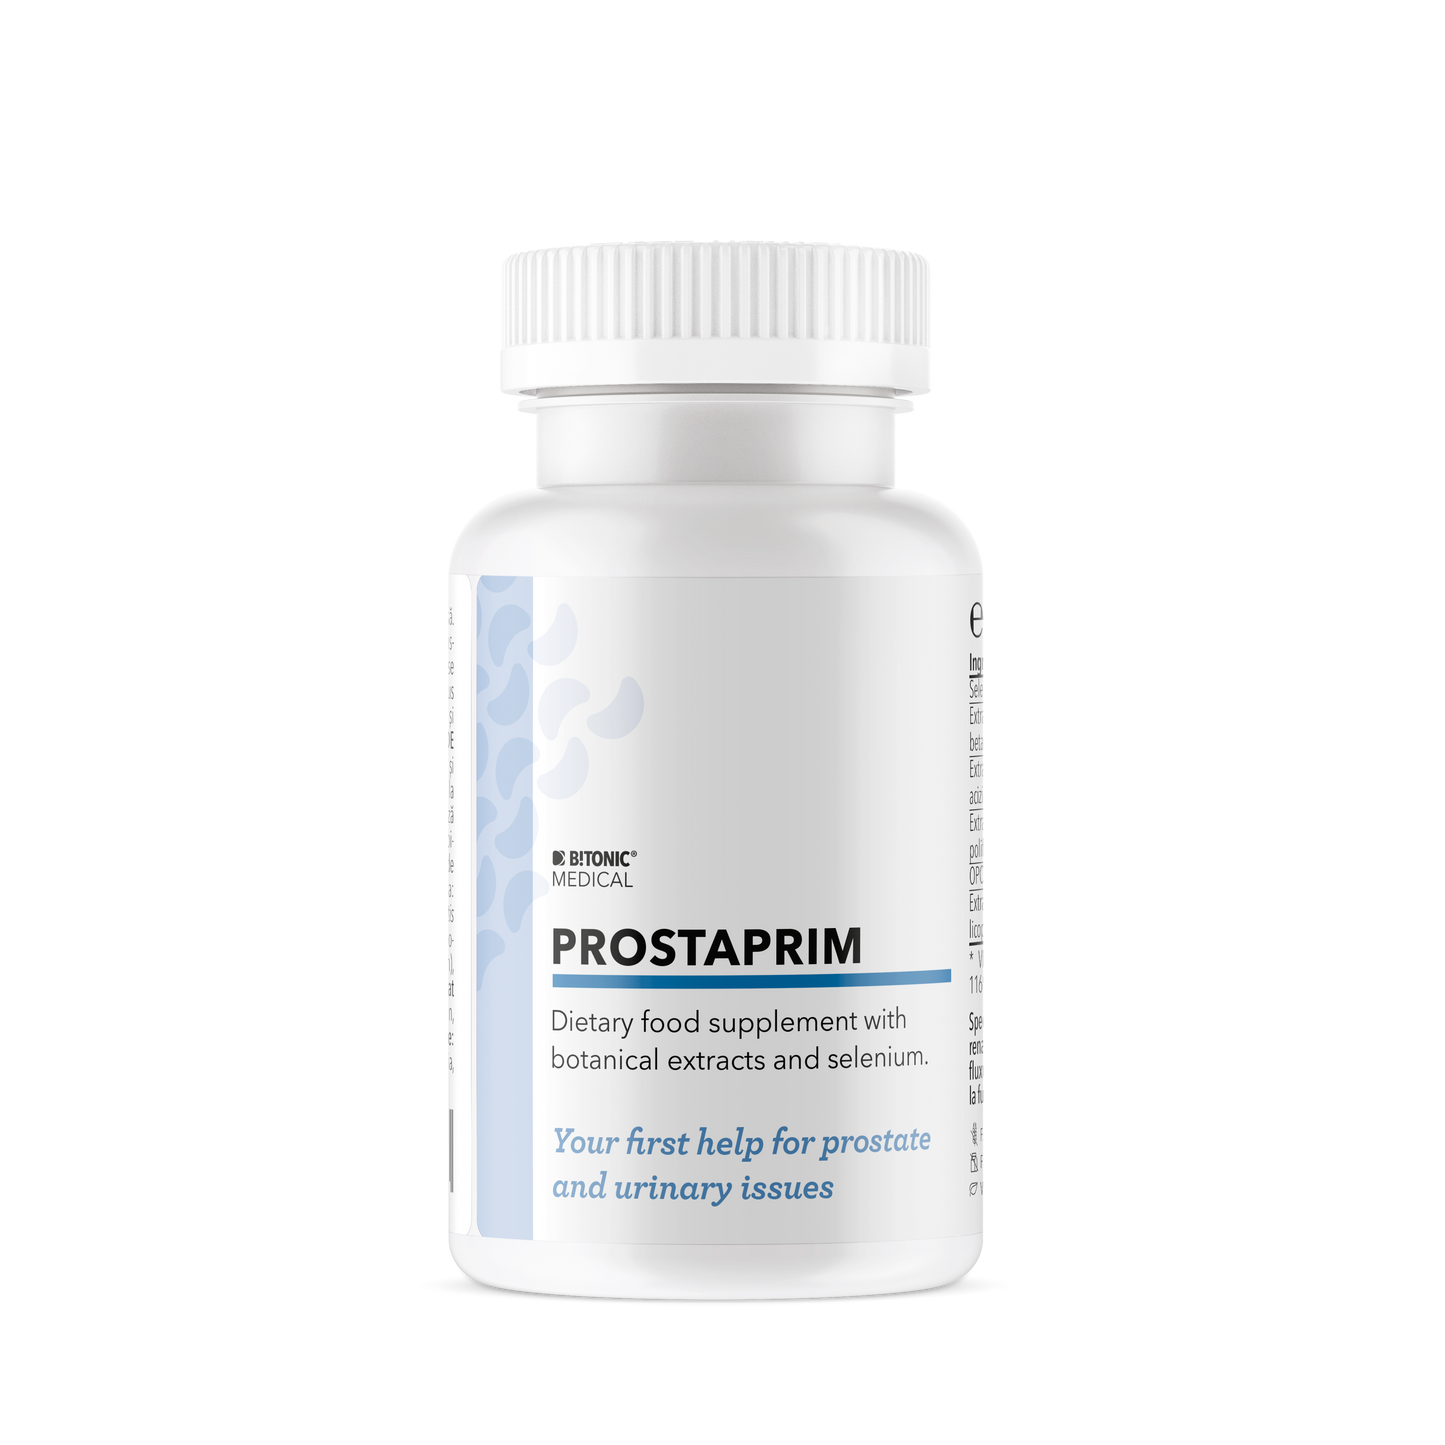 BTONIC MEDICAL Prostaprim